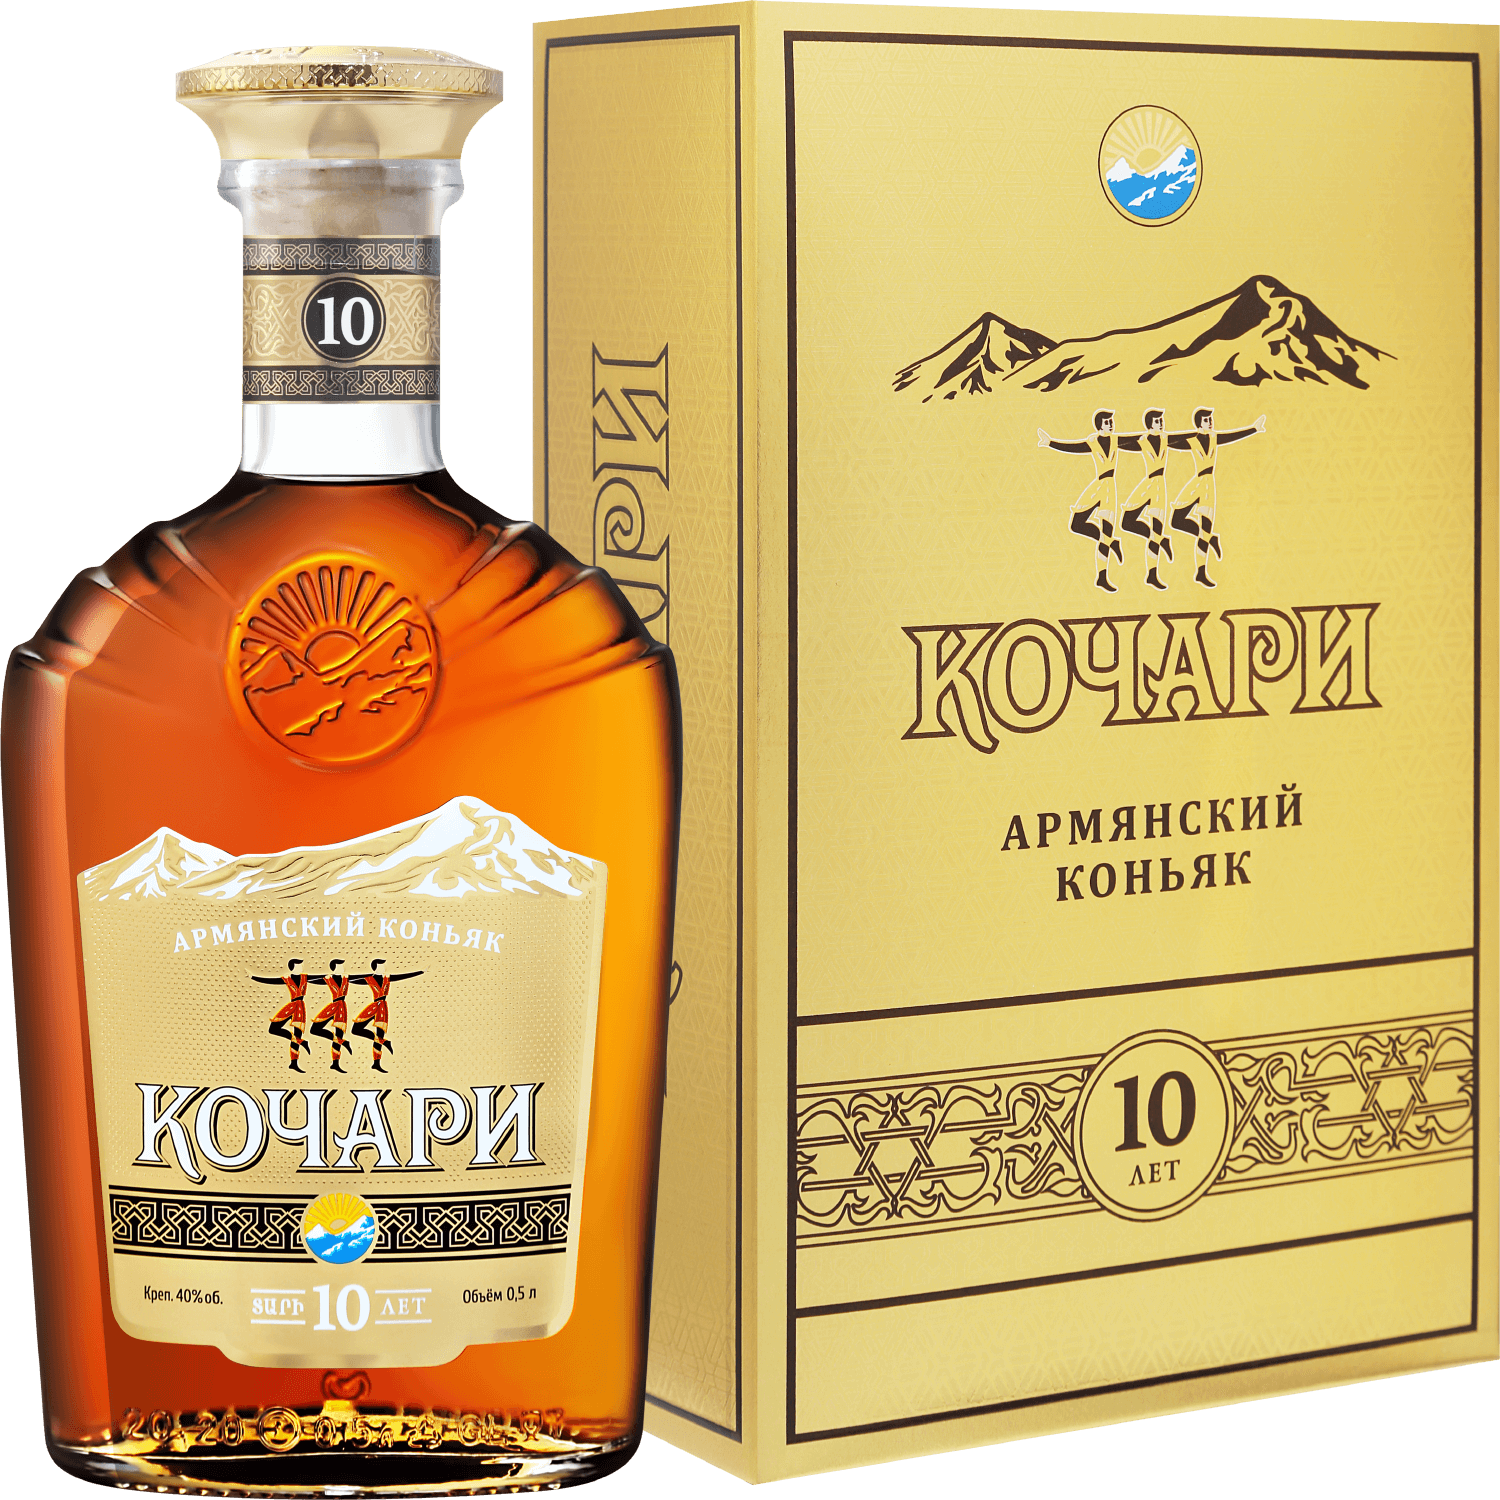 kochari armenian brandy 3 y o Kochari Armenian Brandy 10 Y.O. (gift box)